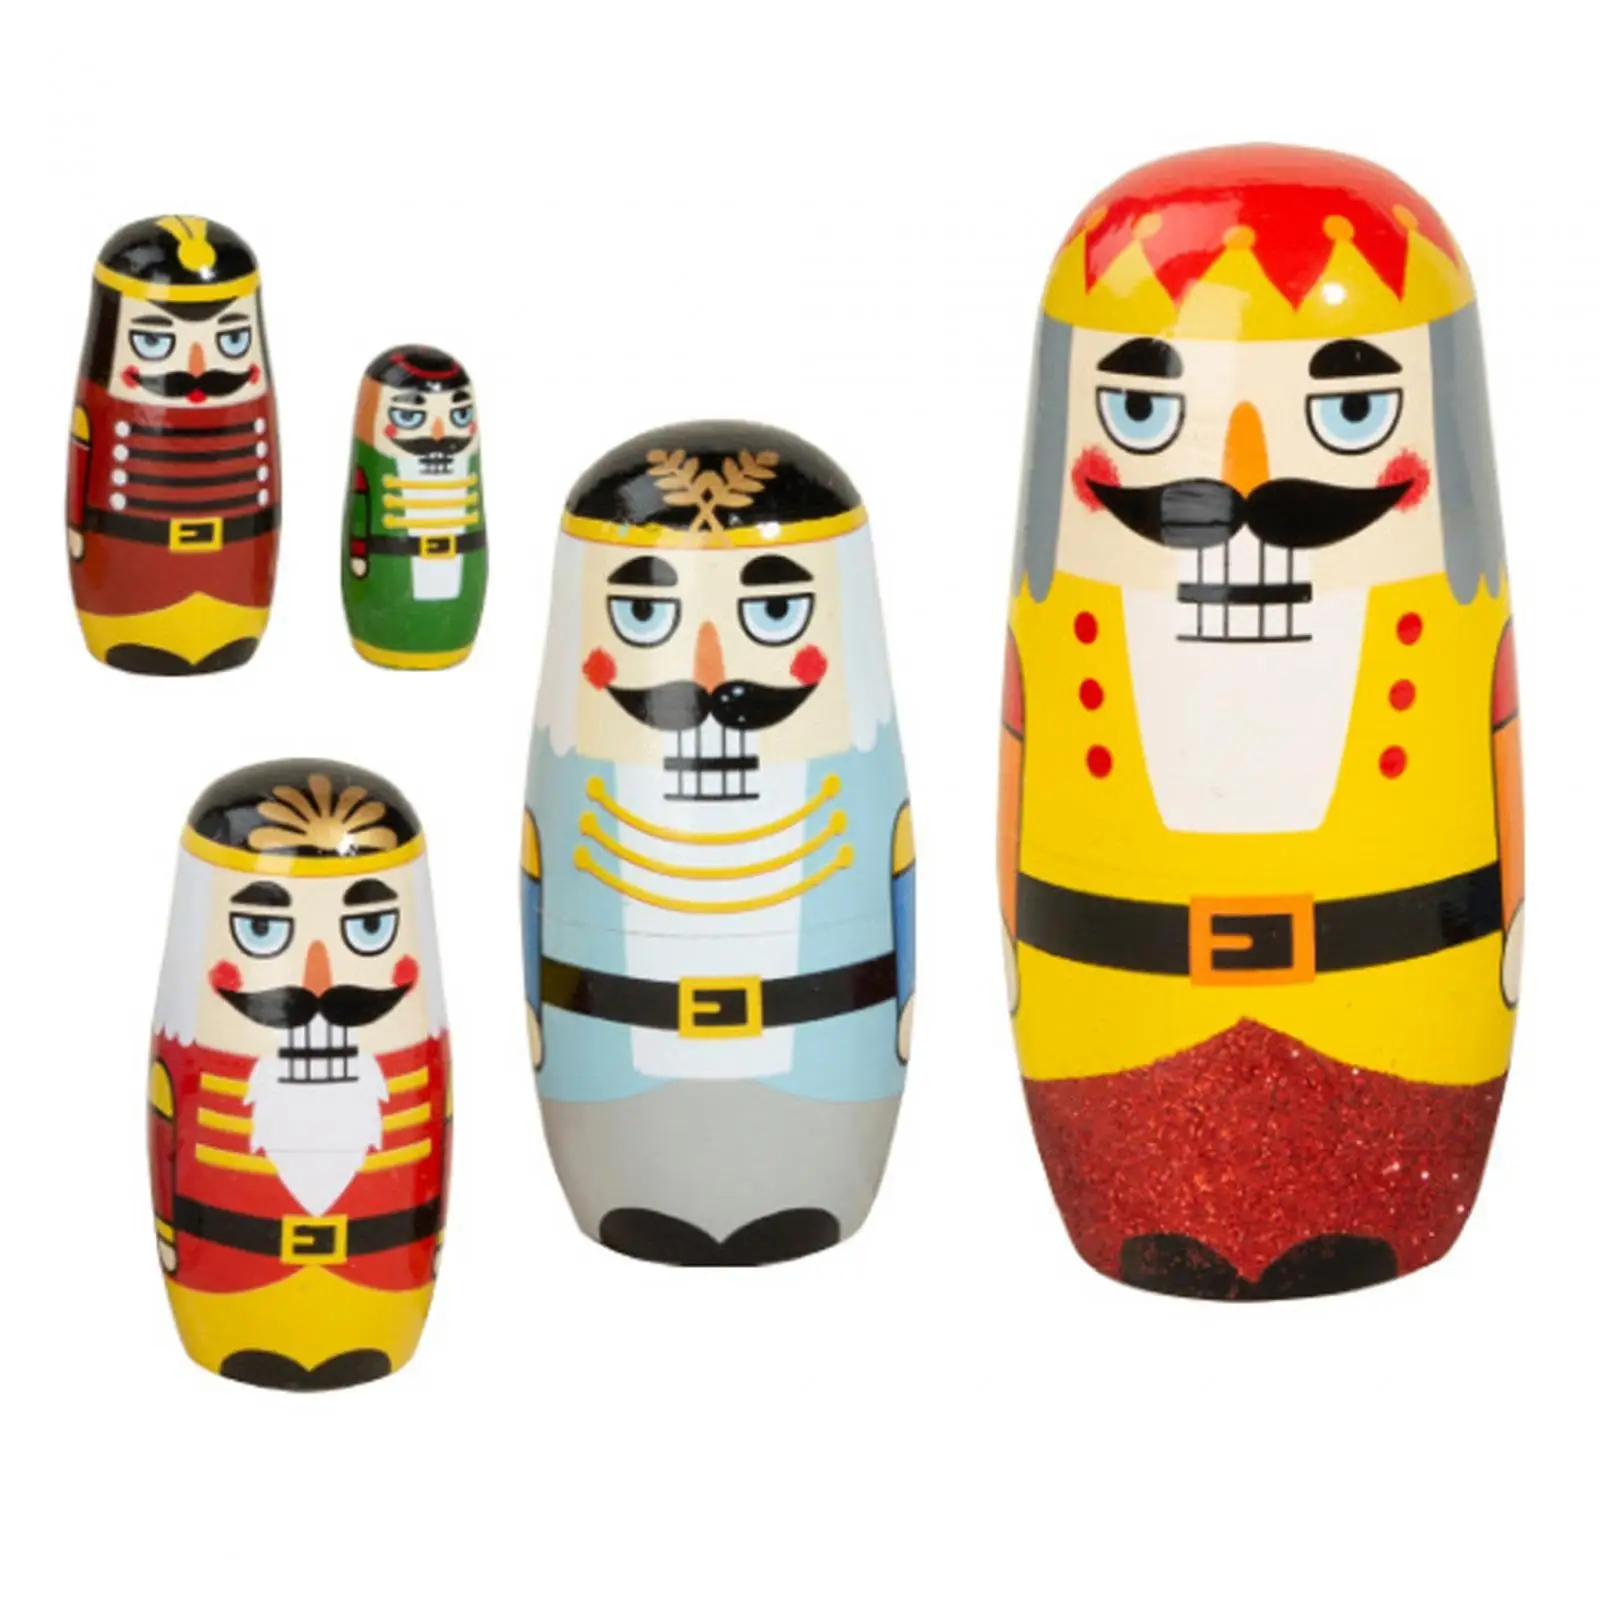 5x Nutcracker Handmade Shelf Cute Birthday Gifts Russian Nesting Dolls Decor